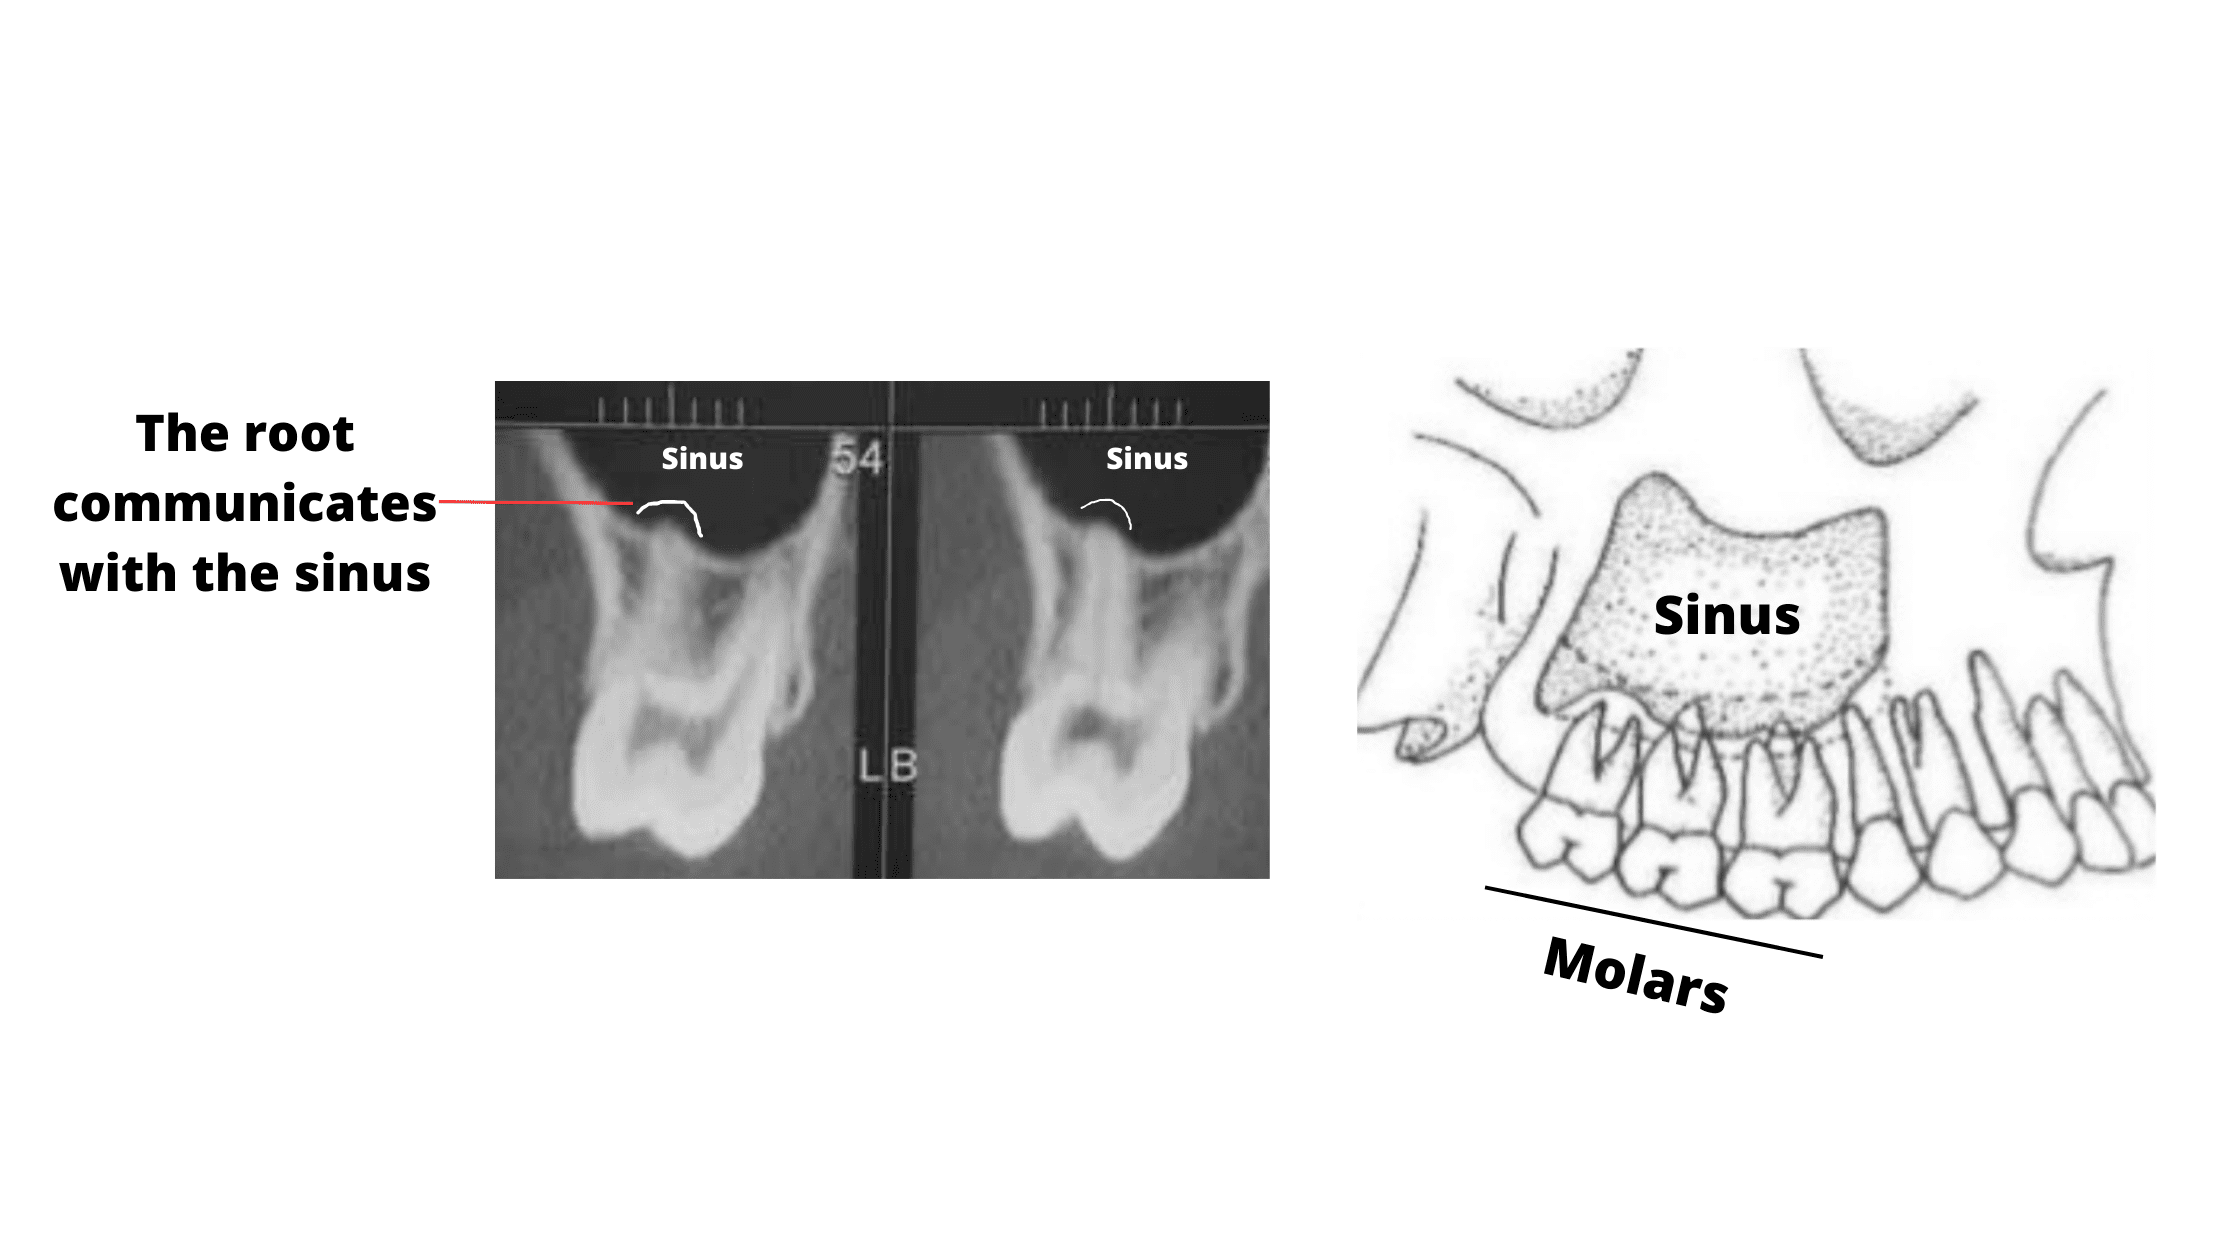 molar teeth communicating with the sinus